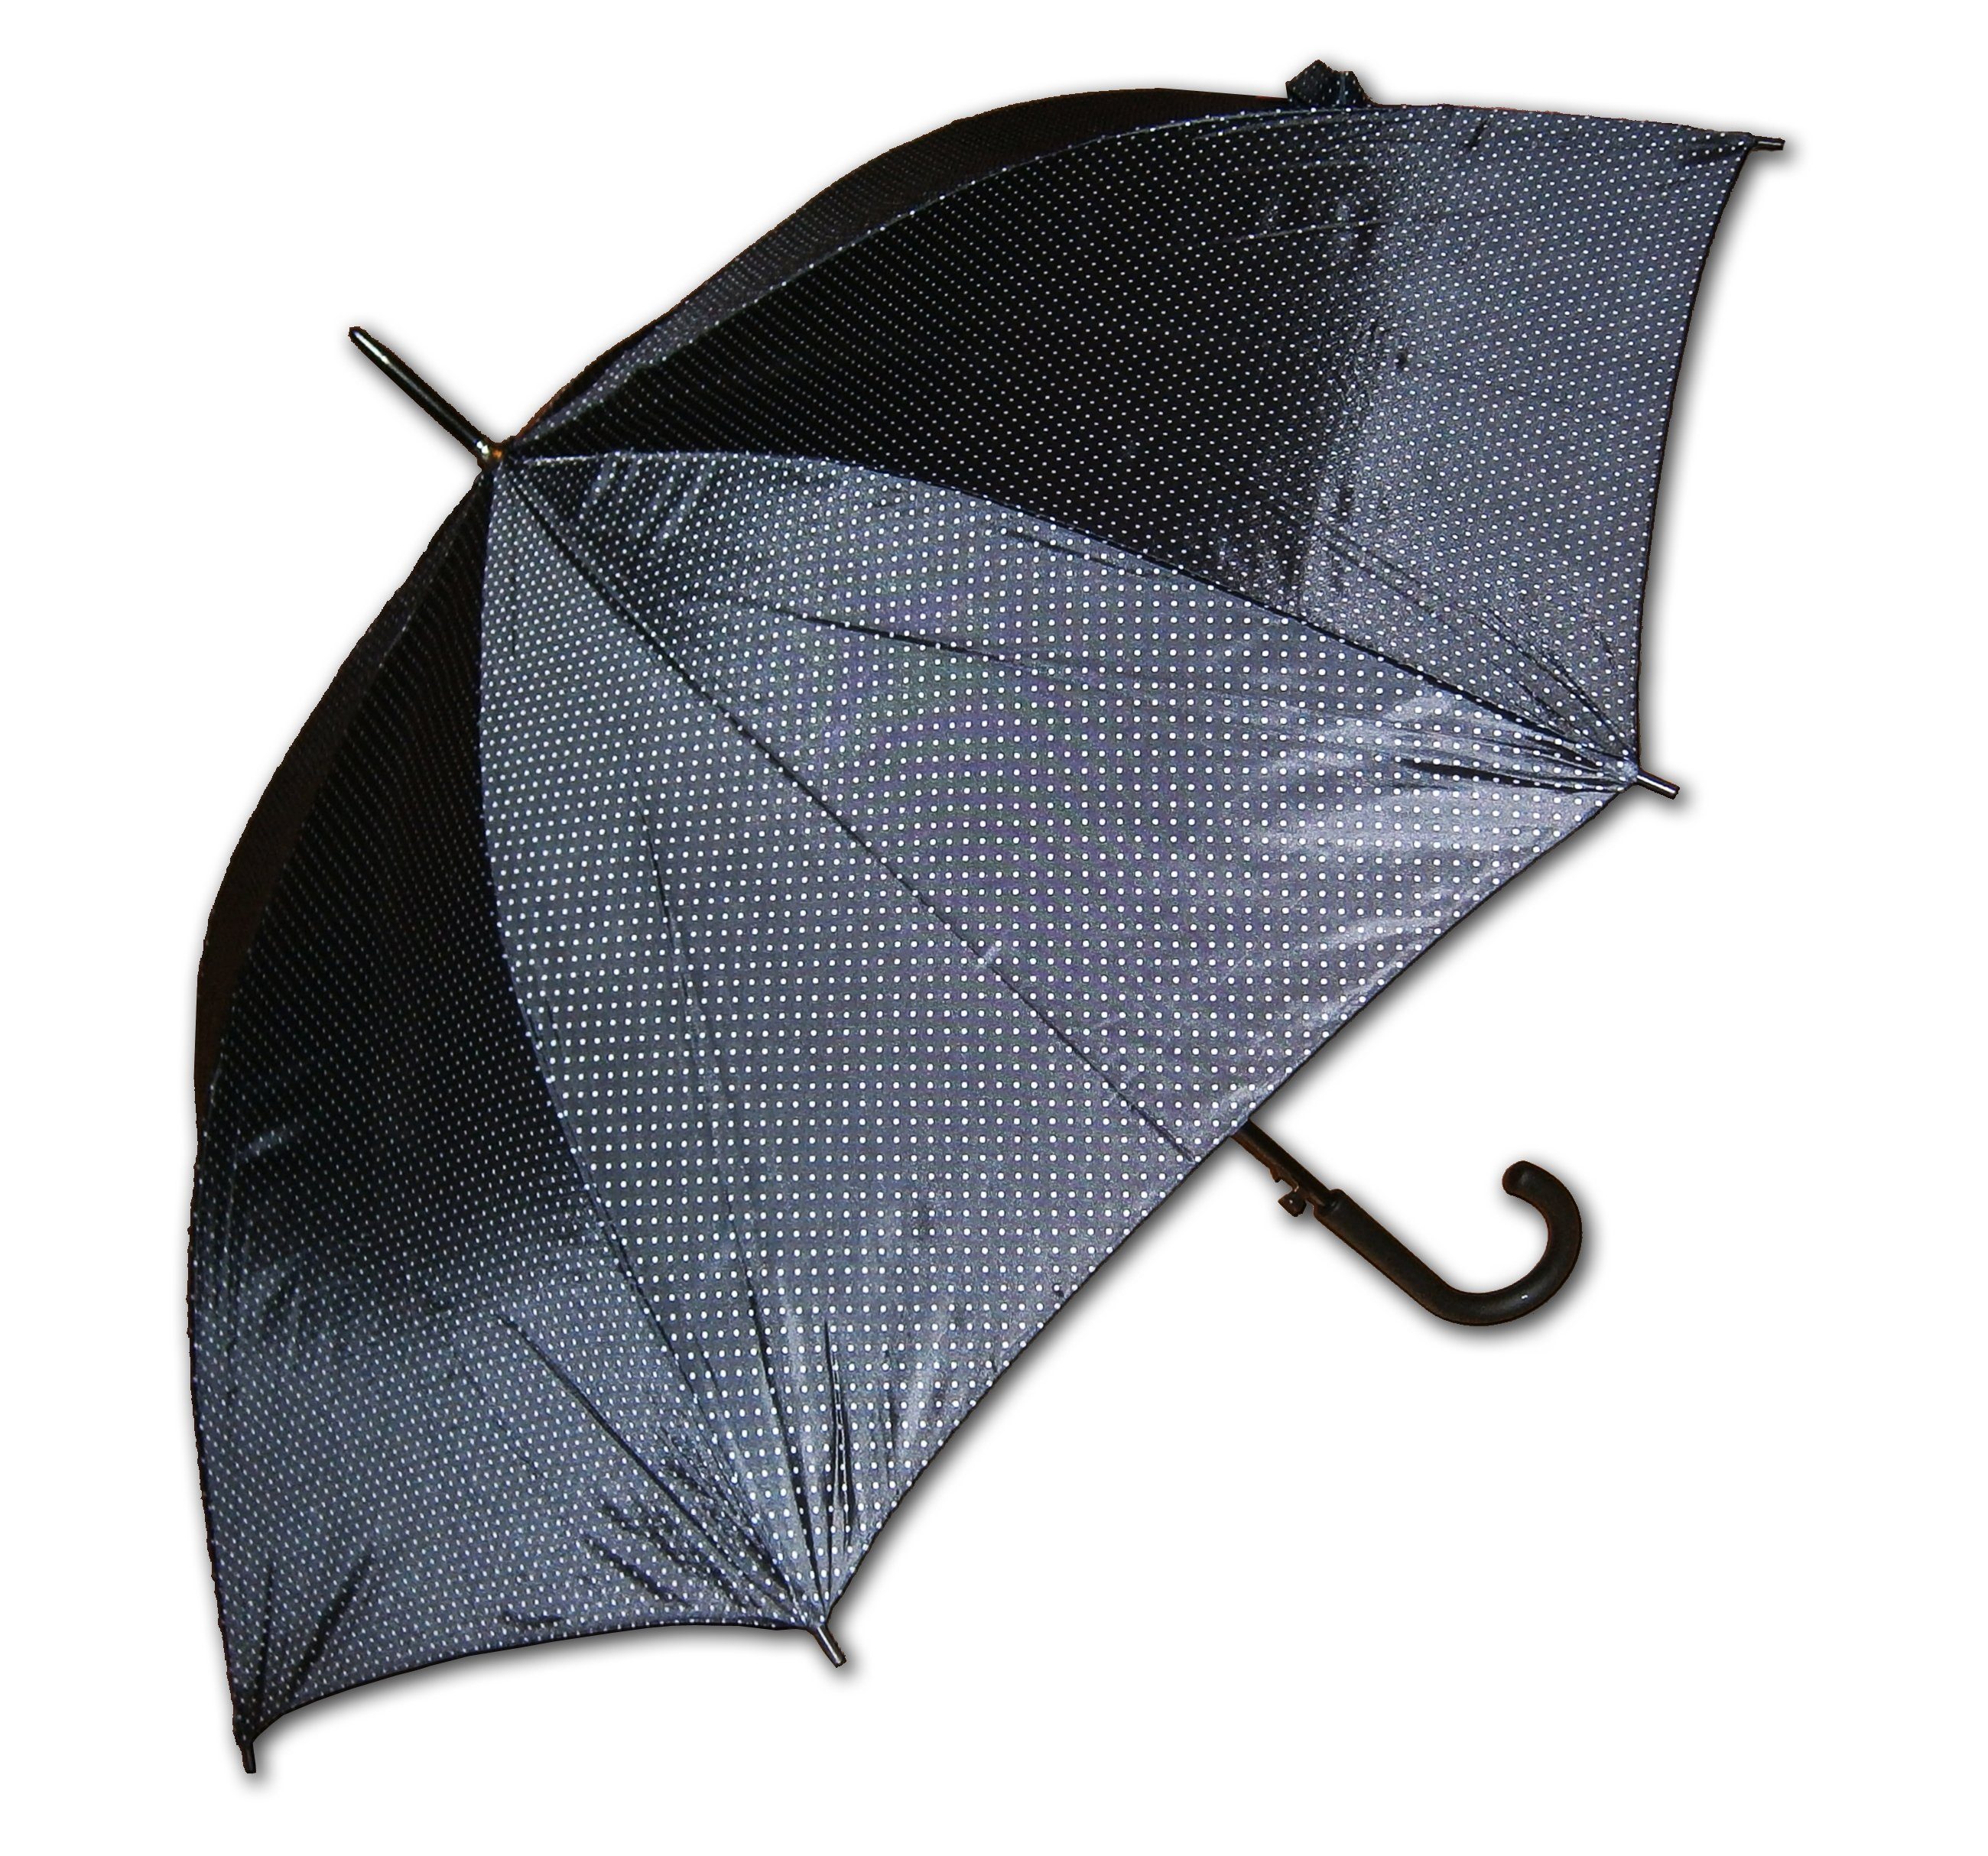 Stockregenschirm Automatik STOCKSCHIRM Ø100cm Schwarz/Punkte 84cm 2103 (Schwarz/Punkte), Stockregenschirm Regenschirm Schirm